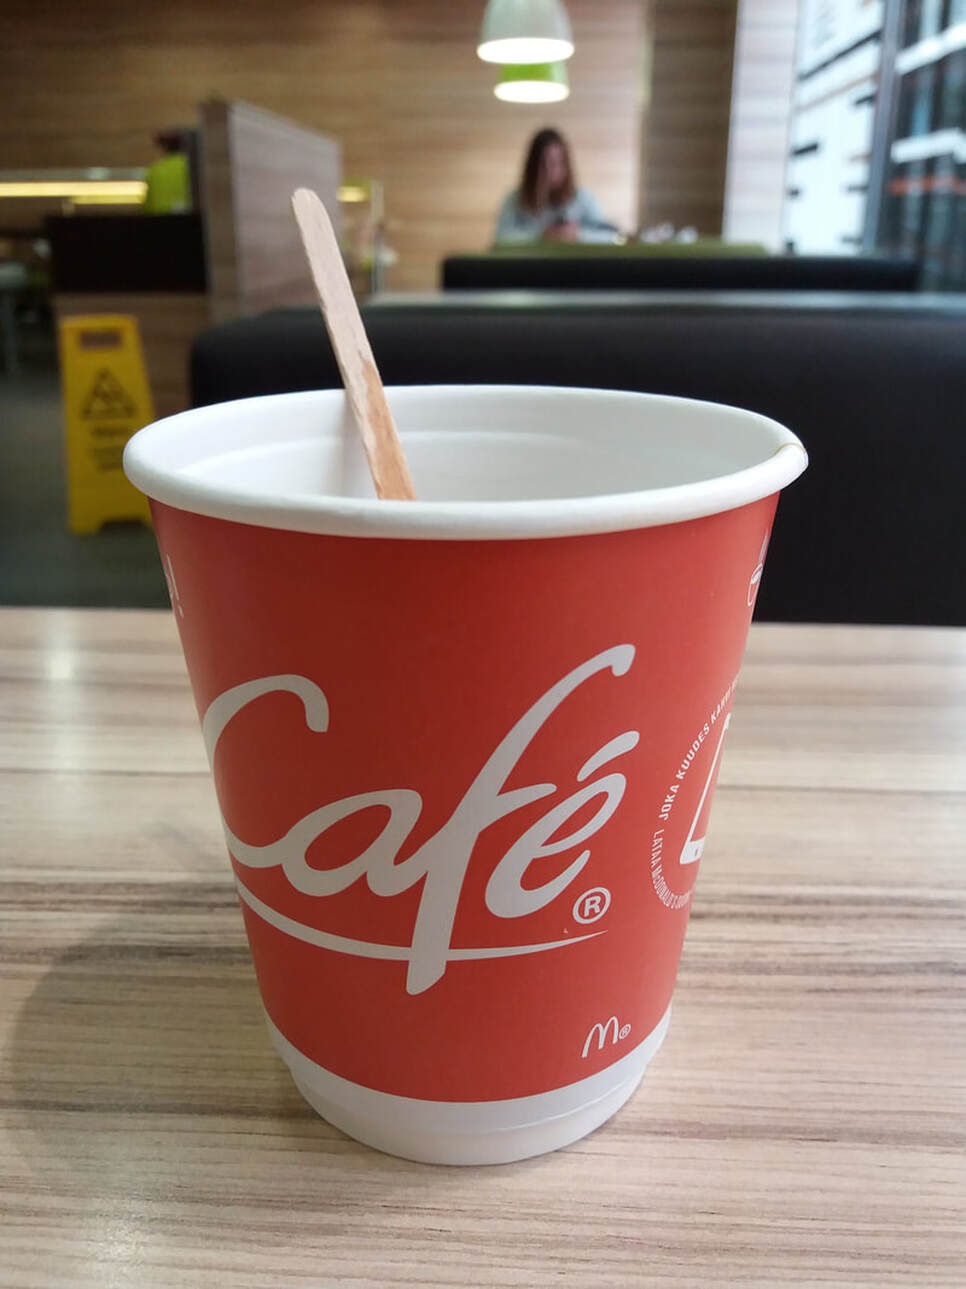 Travel Hack: McDonald's coffee